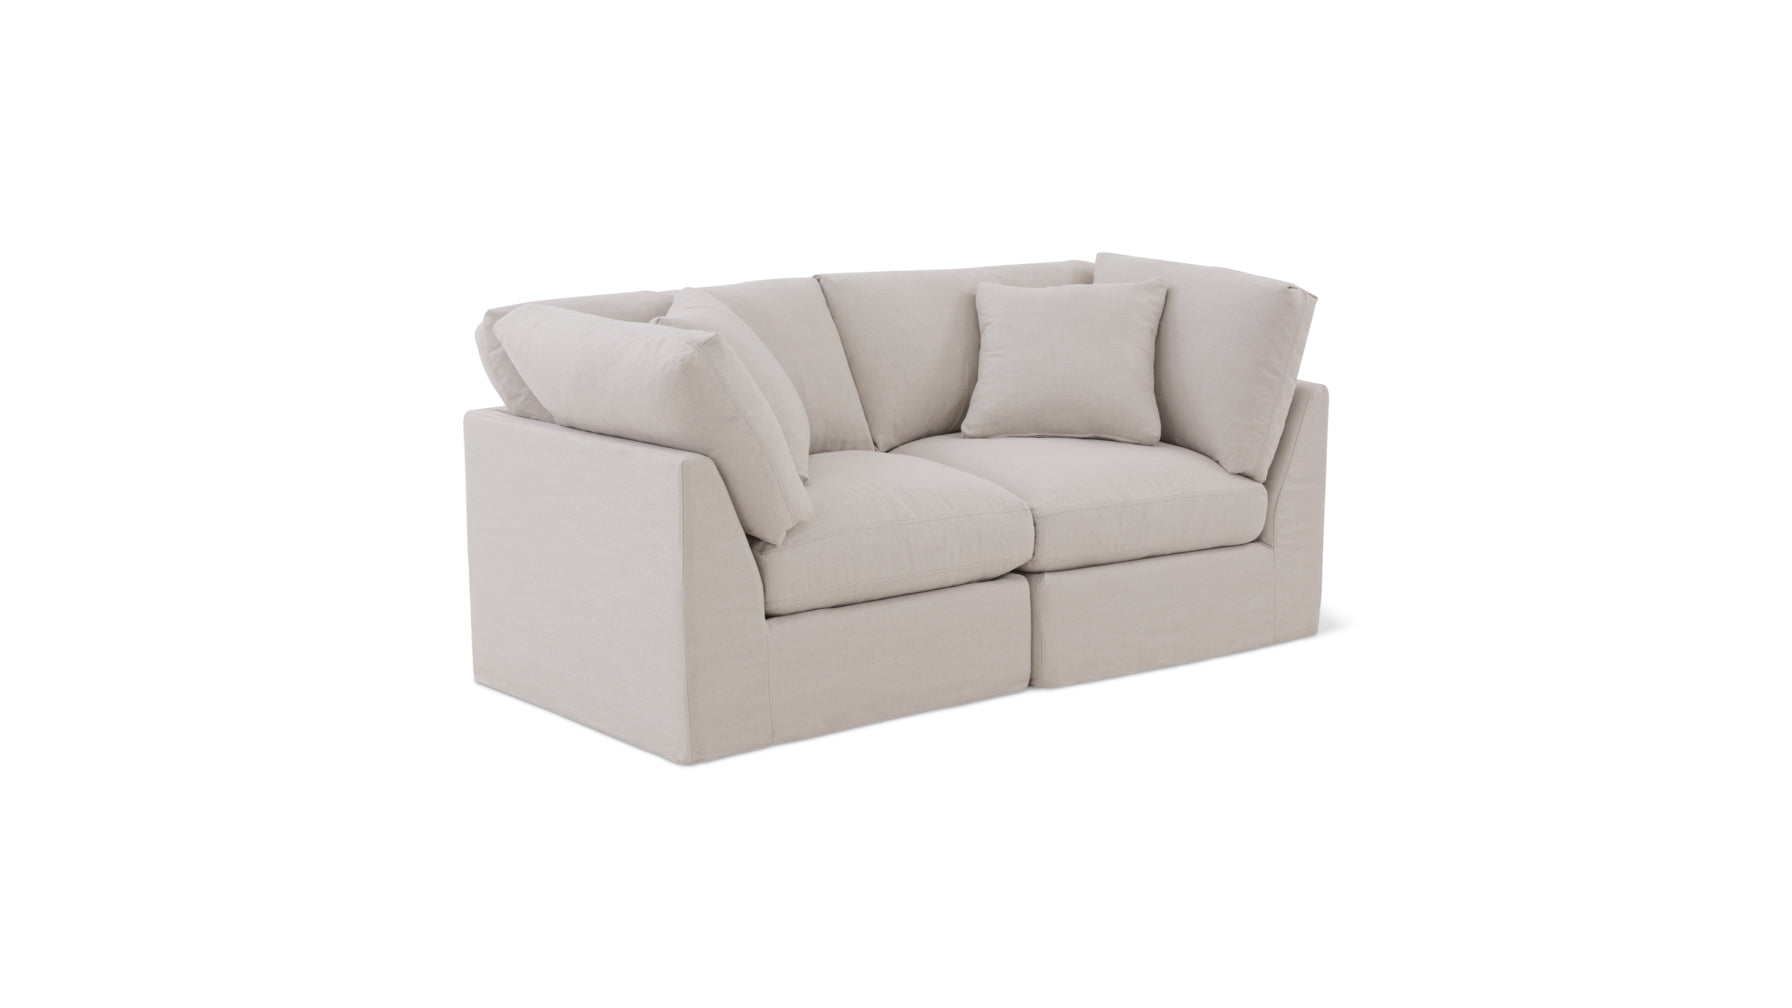 Get Together™ 2-Piece Modular Sofa, Standard, Clay - Image 5